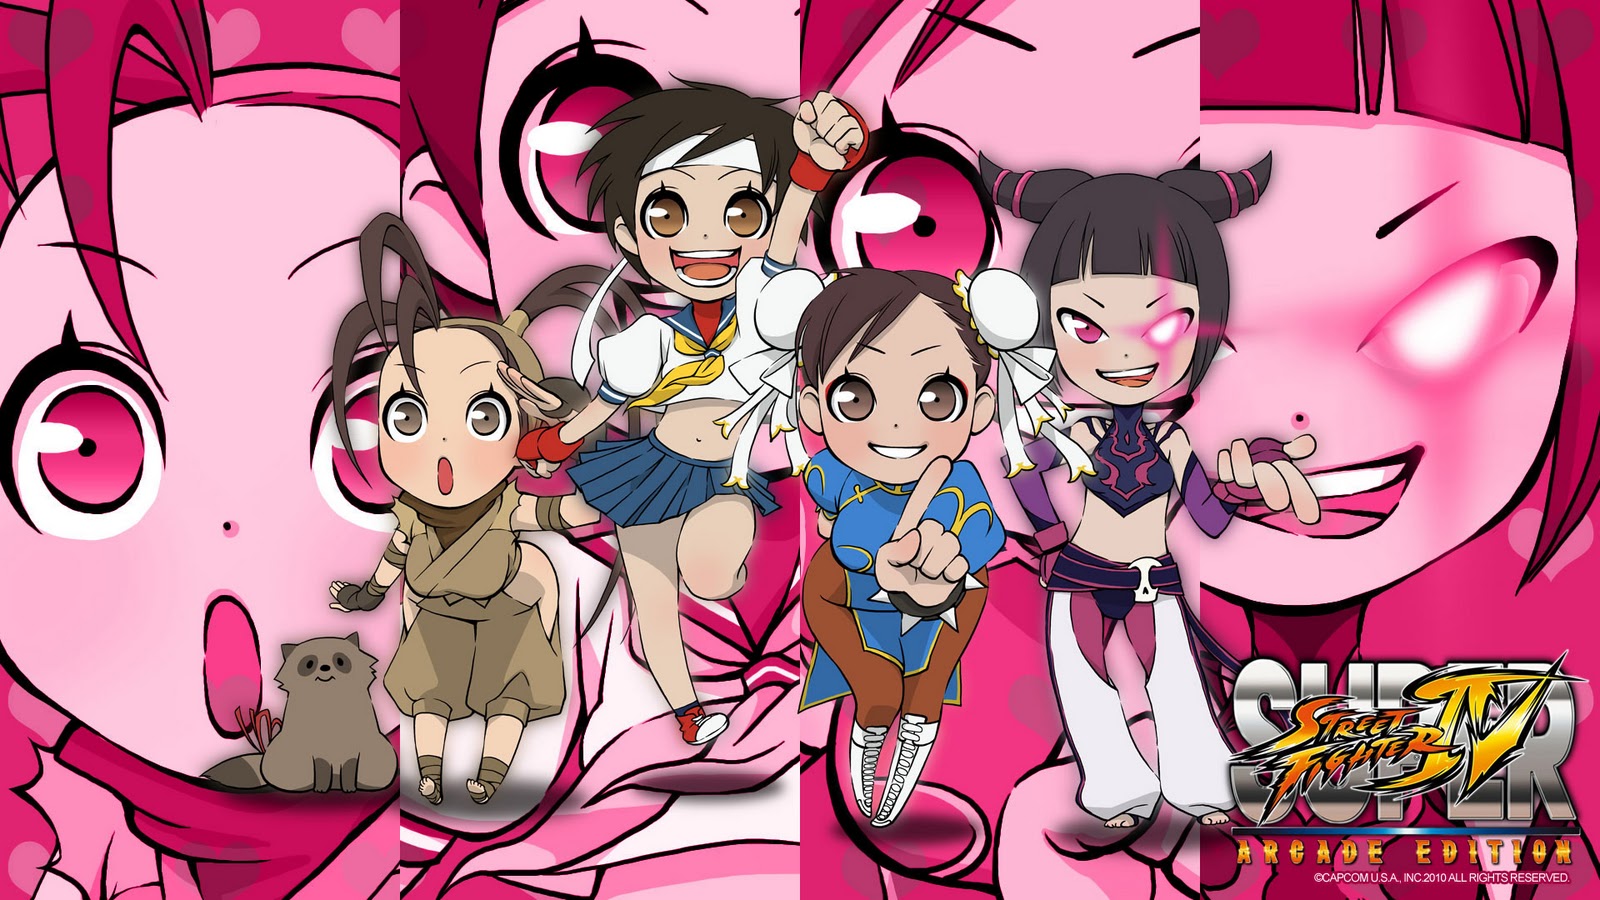 Wallpaper Super Street Fighter Iv Arcade Edition Cute Girls